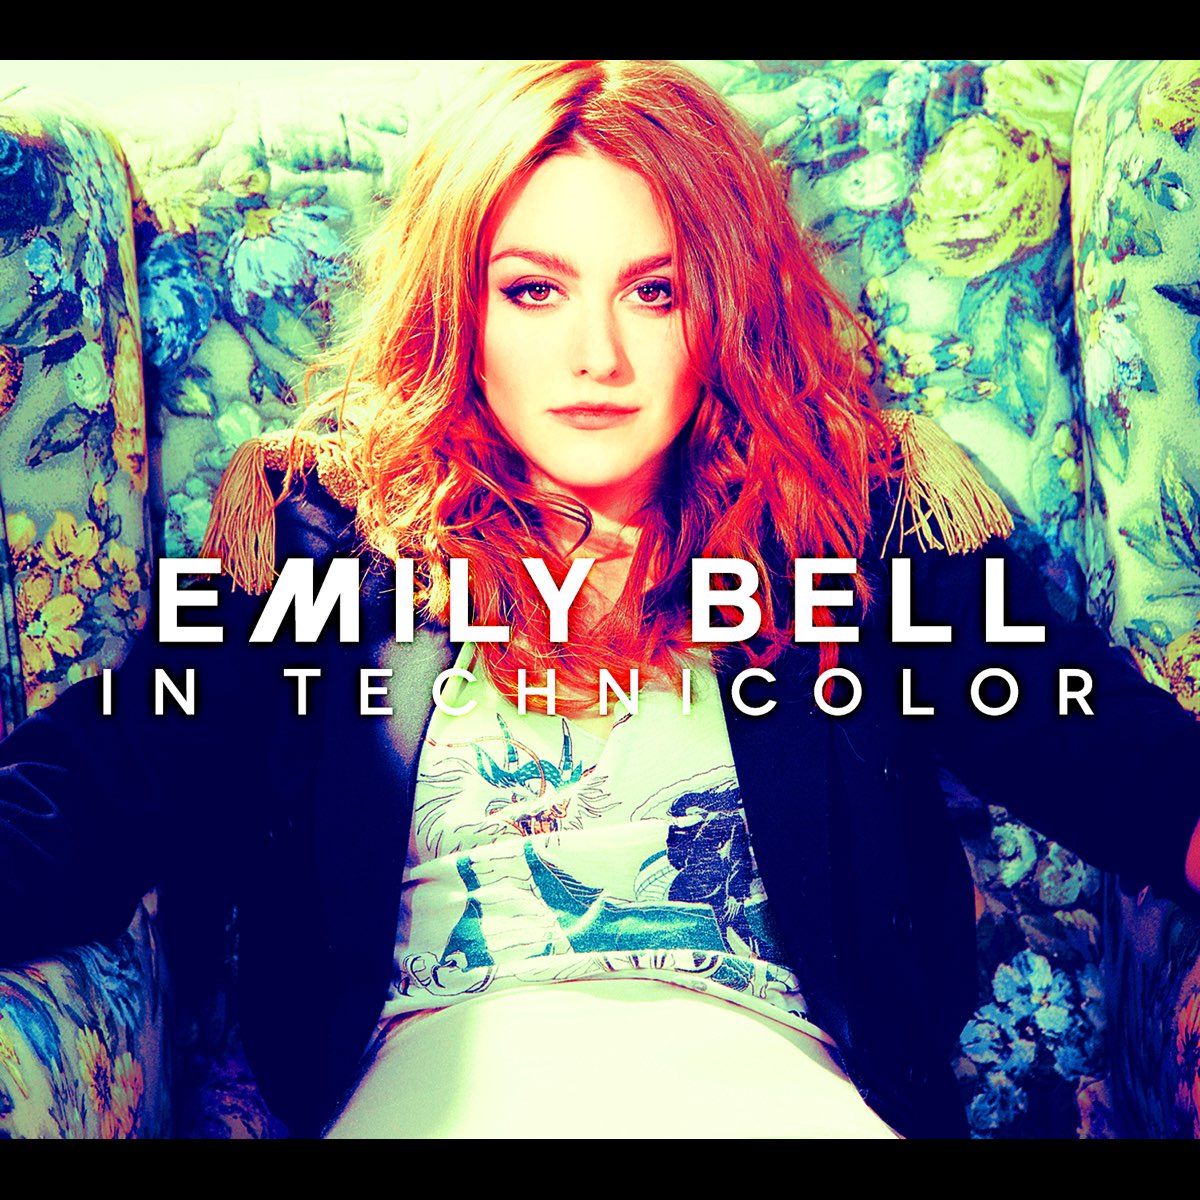 Emilia bell rock